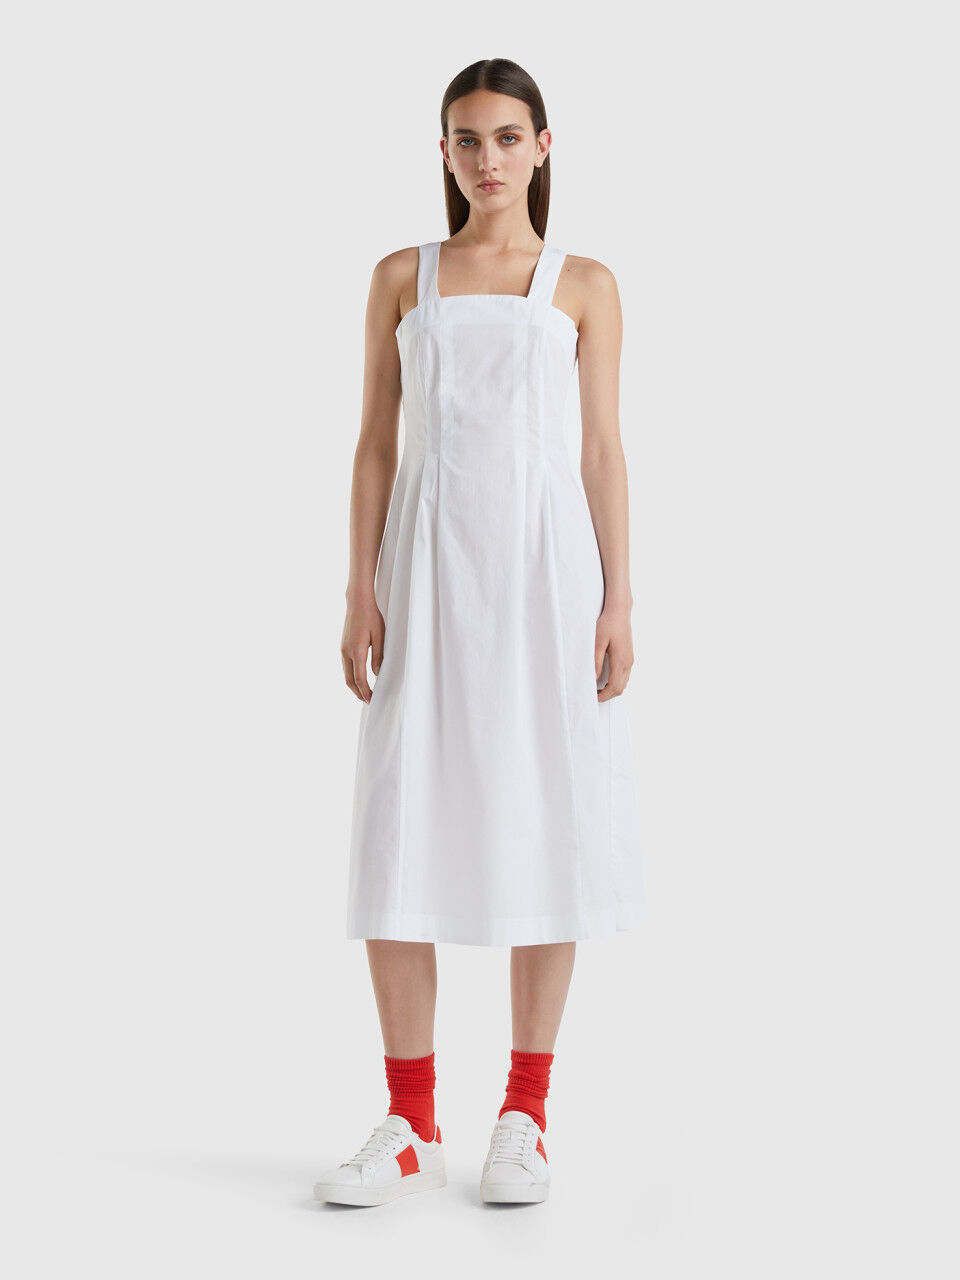 Midi dress in lightweight cotton